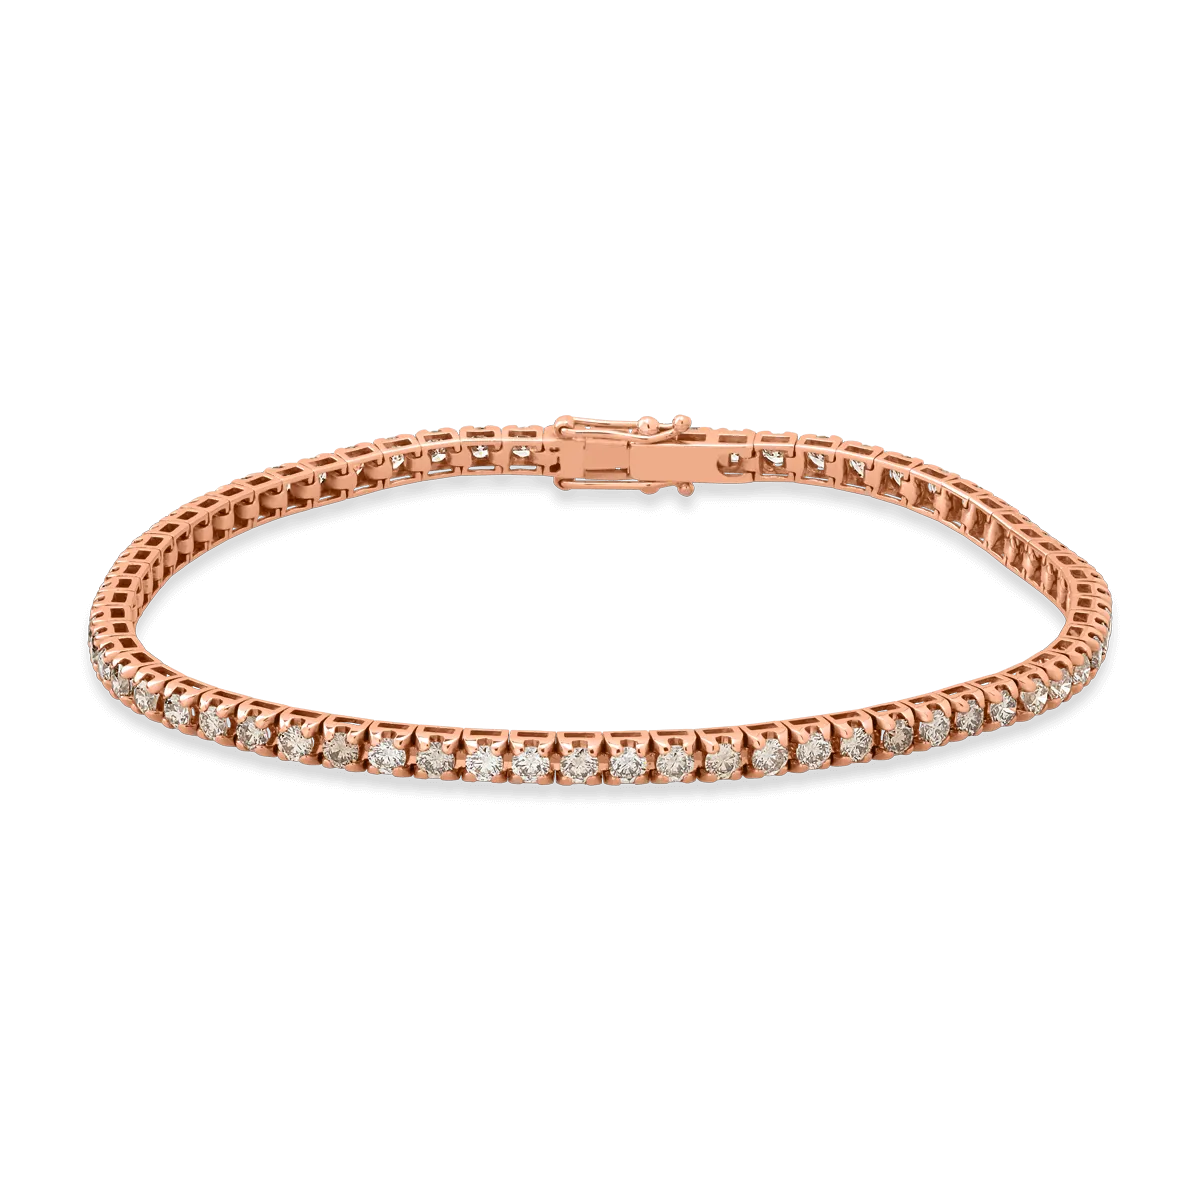 18K rose gold tennis bracelet with 4.45ct brown diamonds